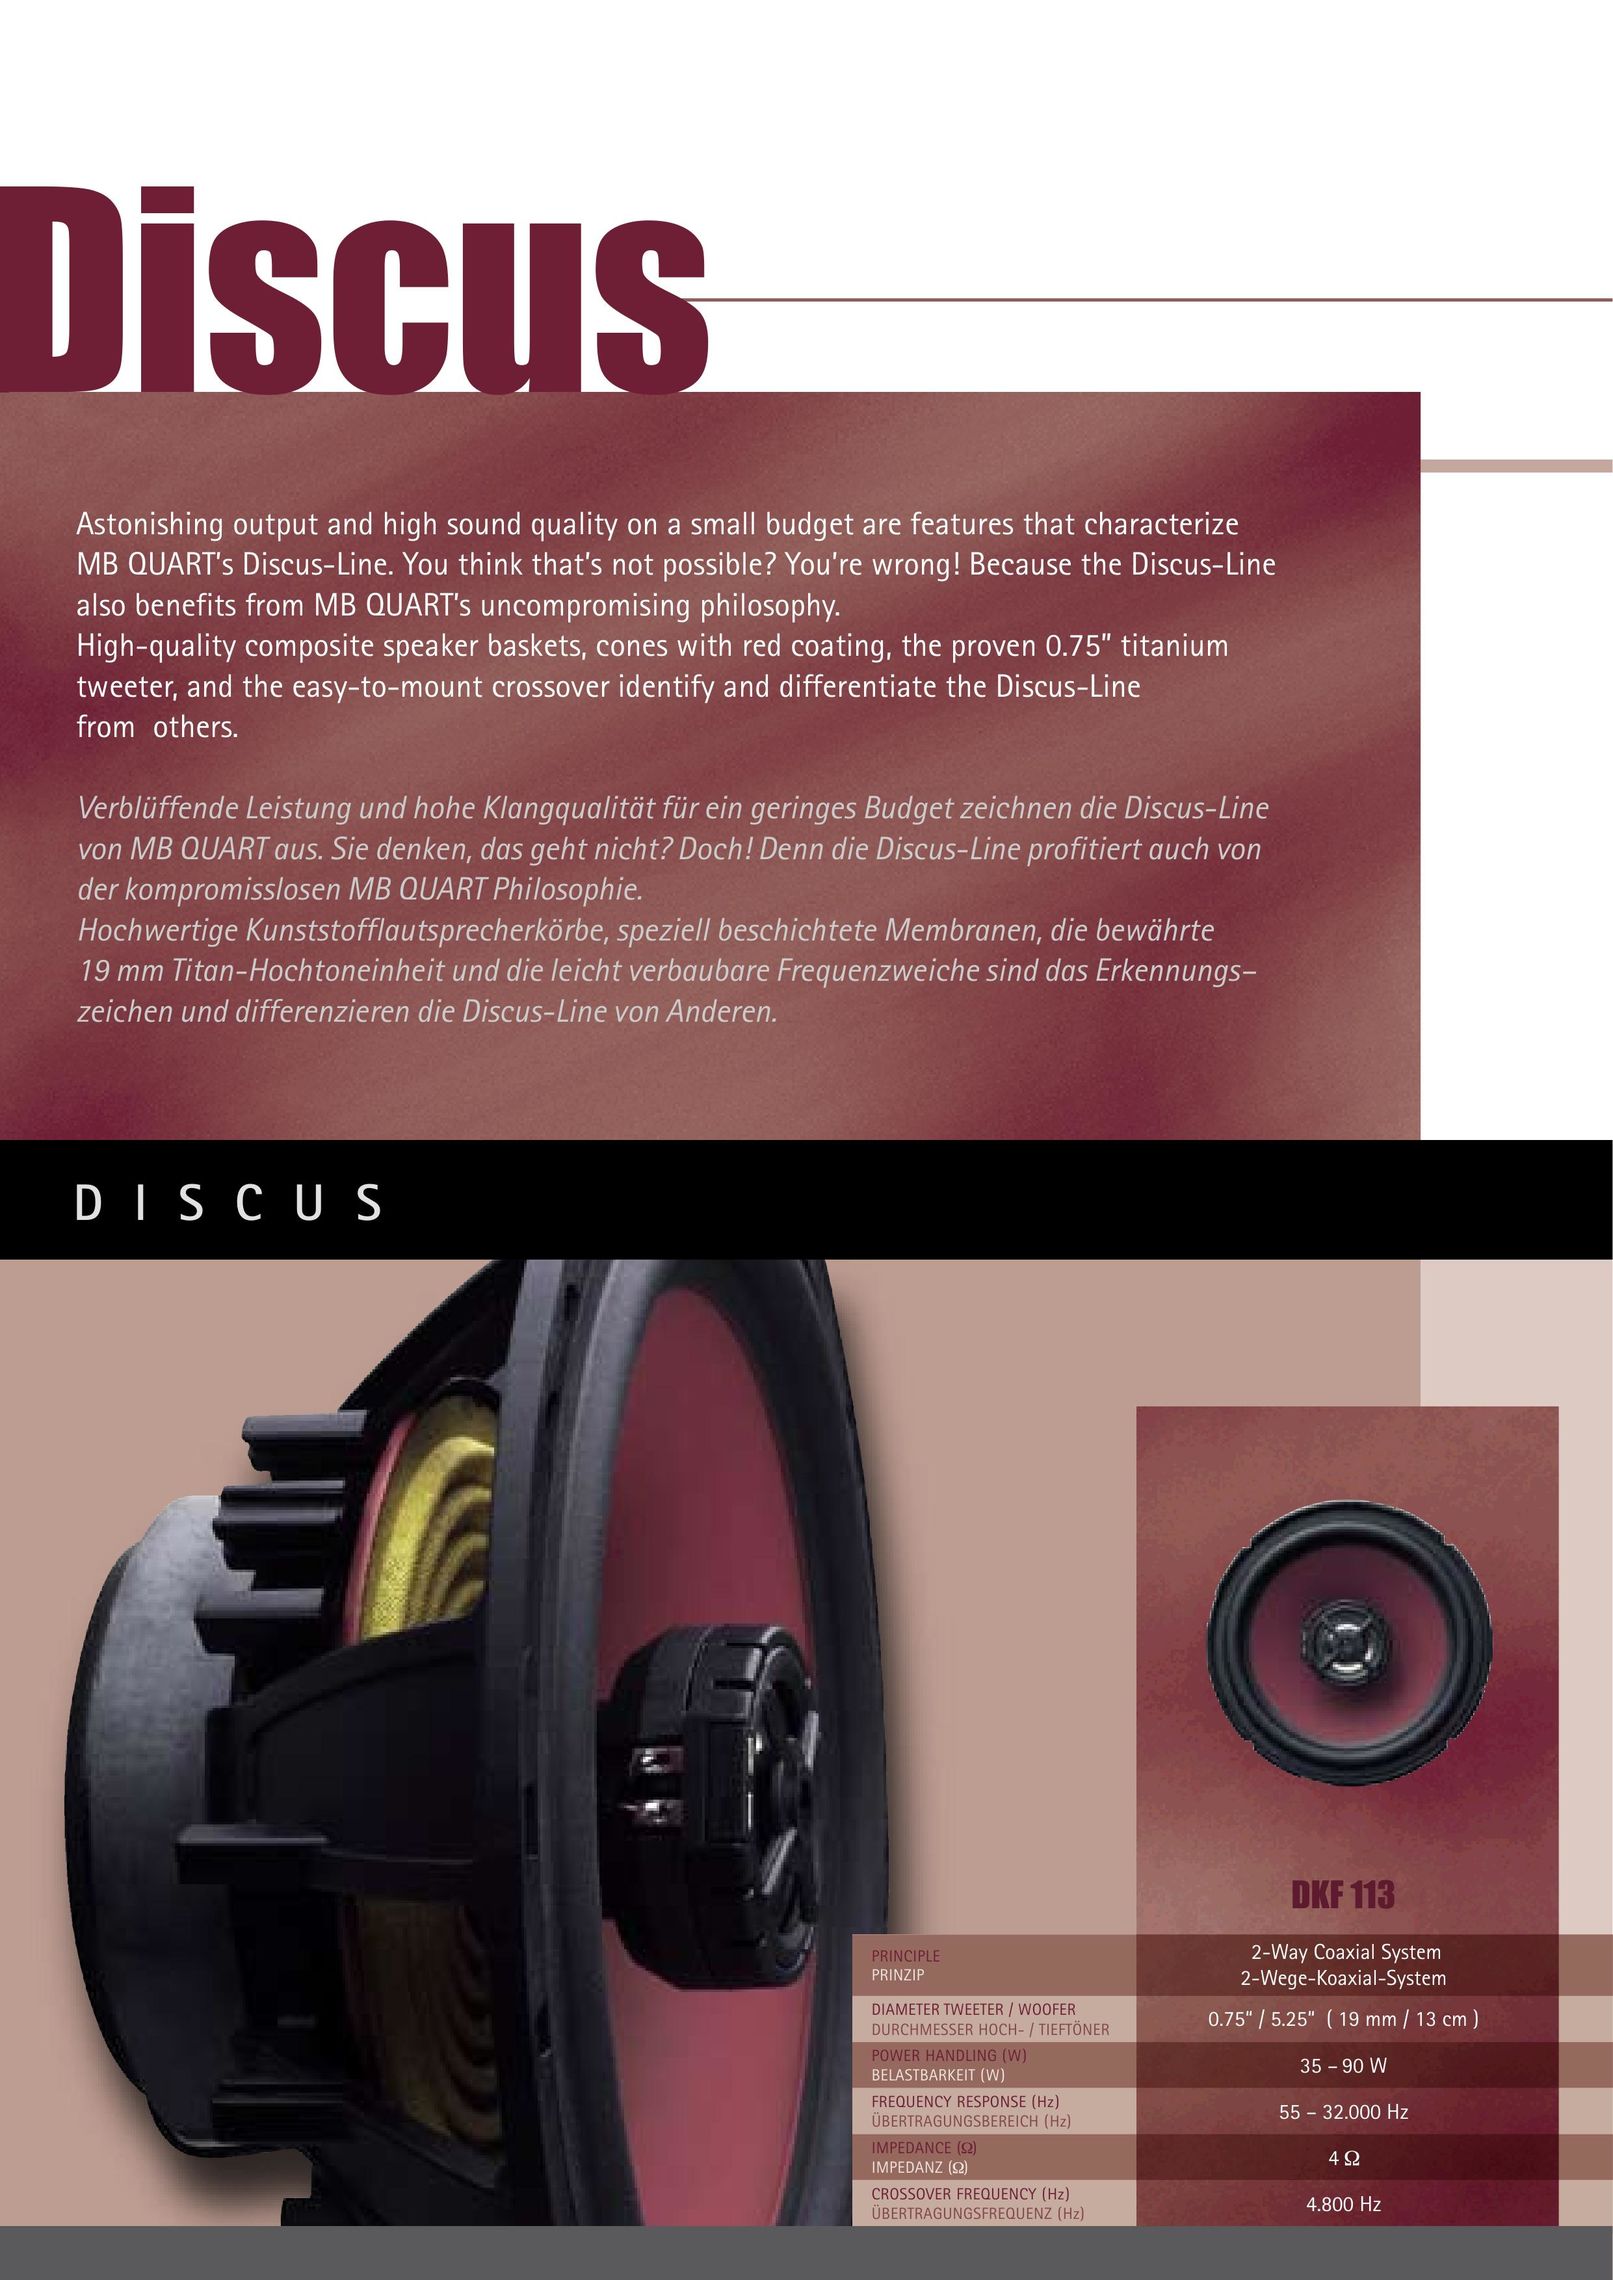 MB QUART DKF 116 Car Speaker User Manual